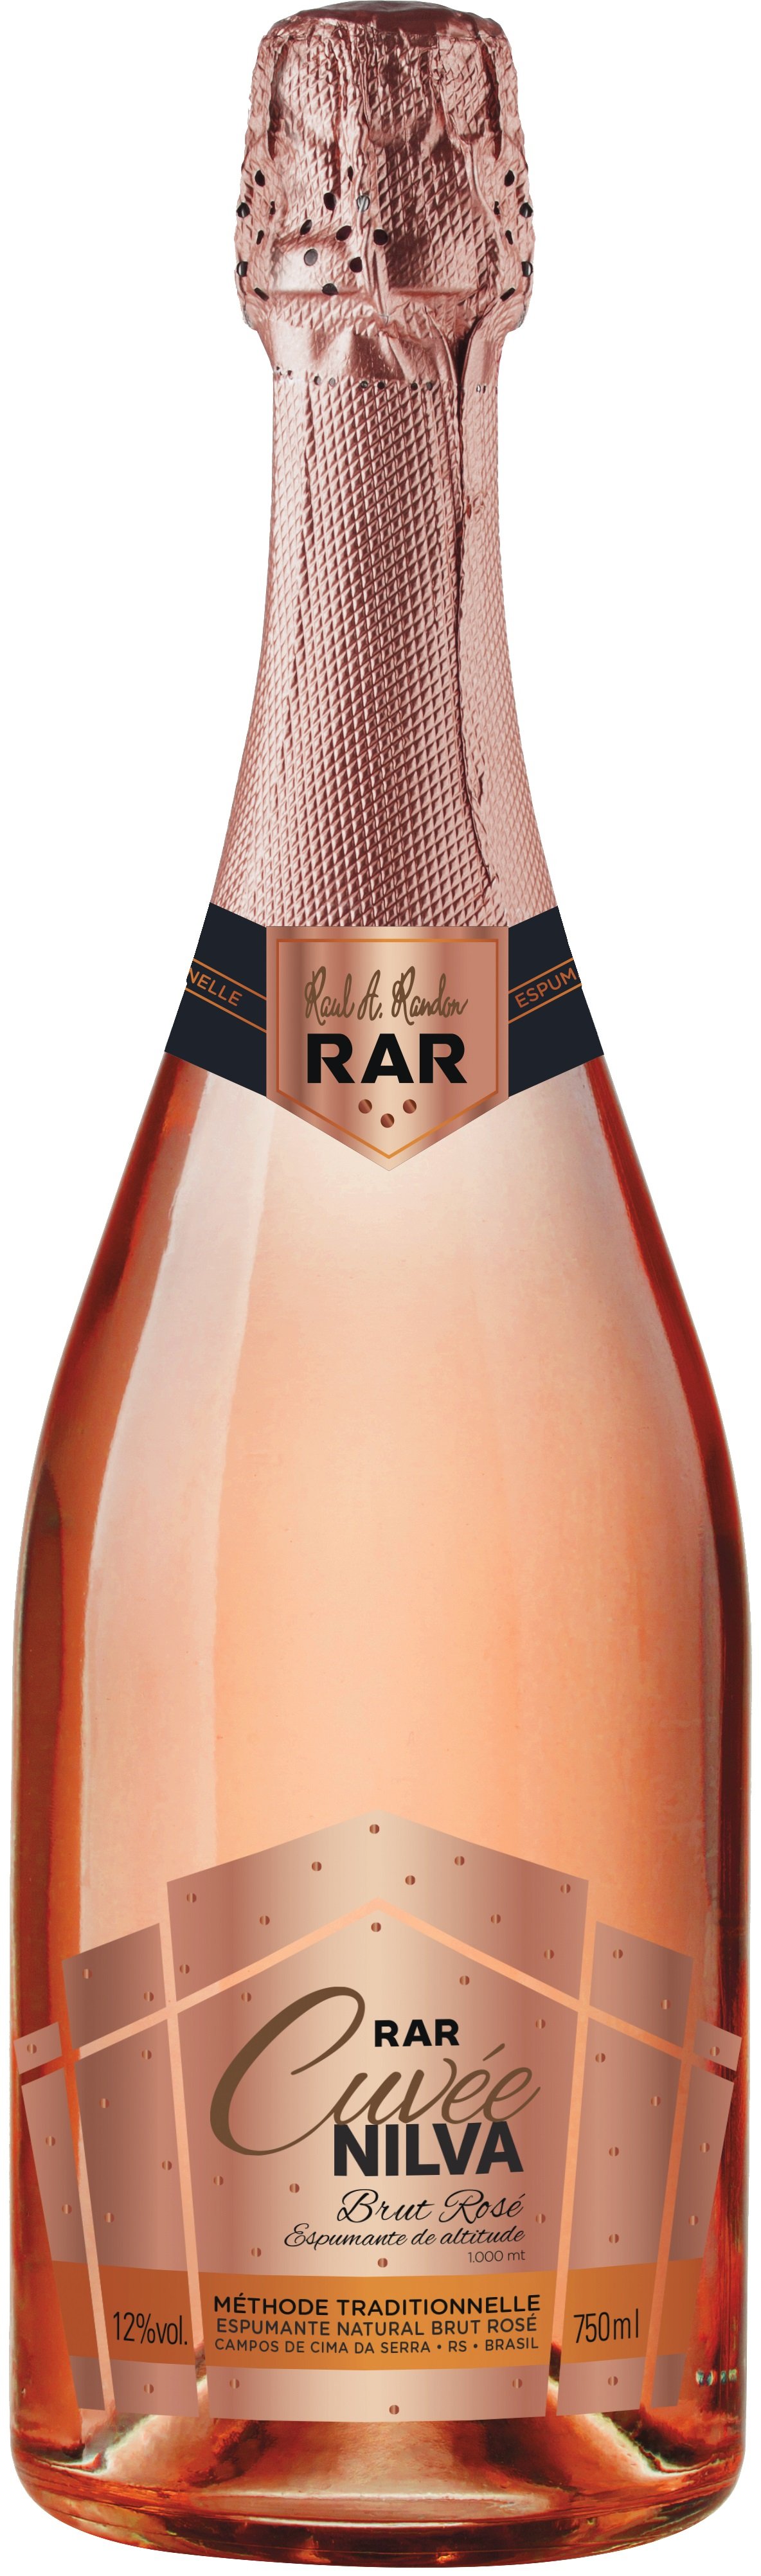 Espumante RaR Verace ml Brut Rosé Cuvée 750 | Vino Nilva